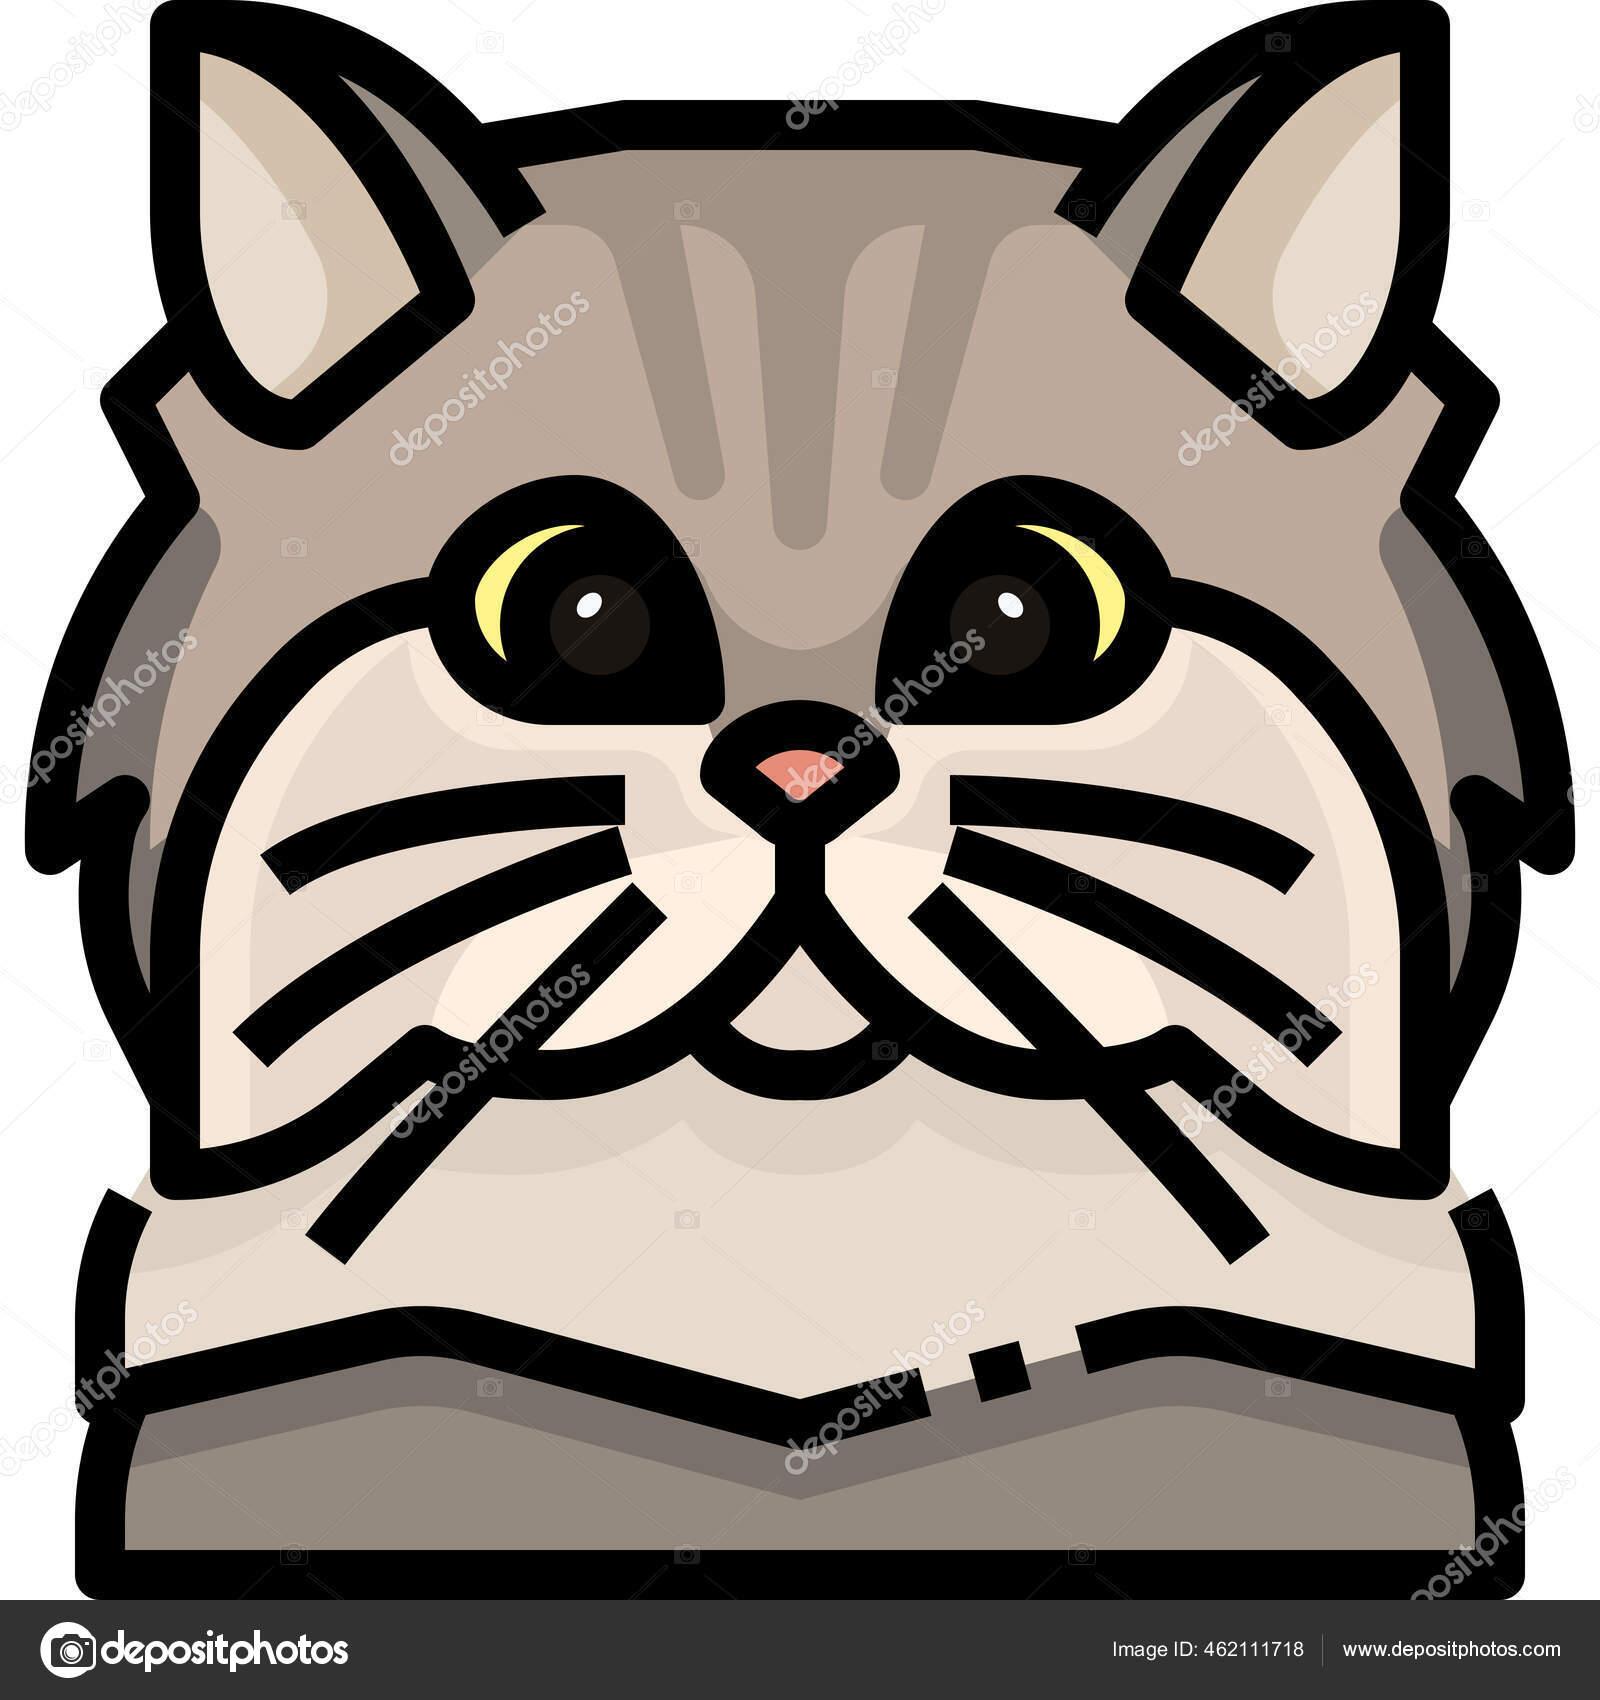 Cat icon - Download on Iconfinder on Iconfinder